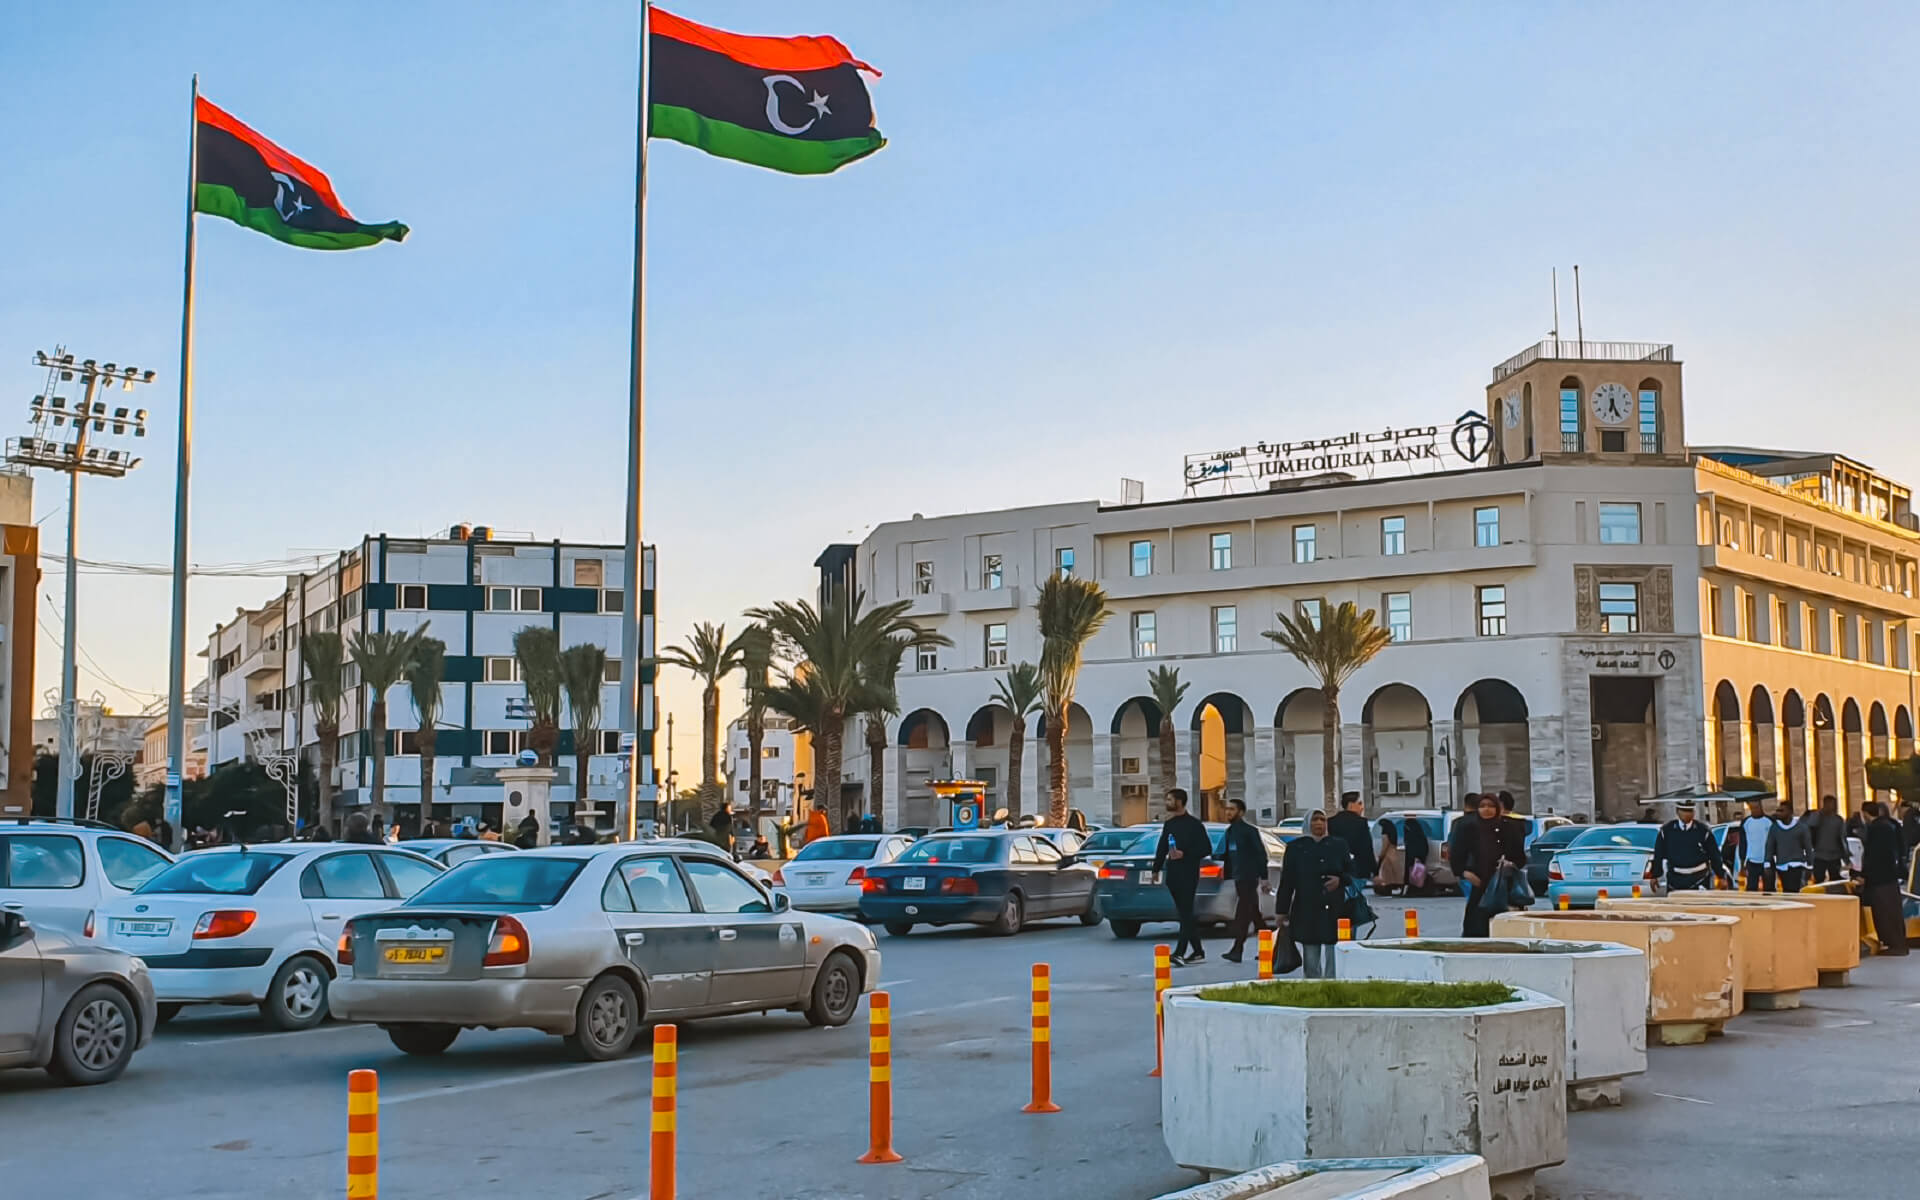 Tripoli-Libya Travel Guide - Travel S Helper